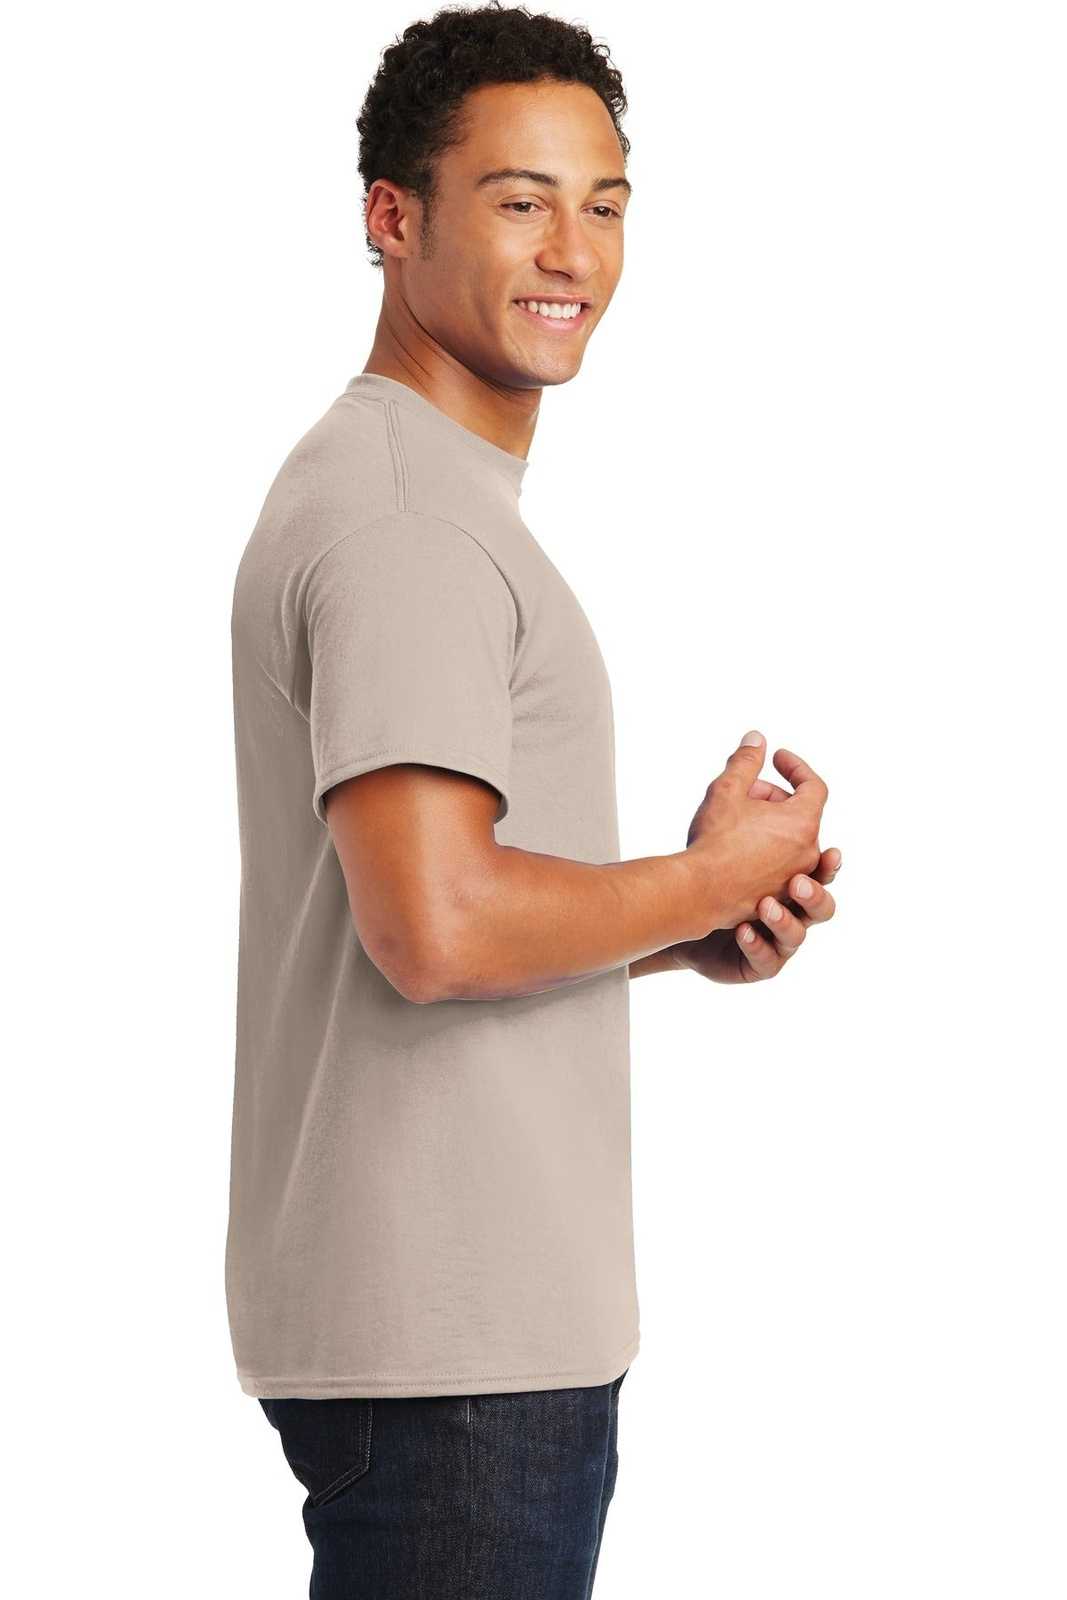 Gildan - DryBlend 50 Cotton/50 Poly T-Shirt, Product